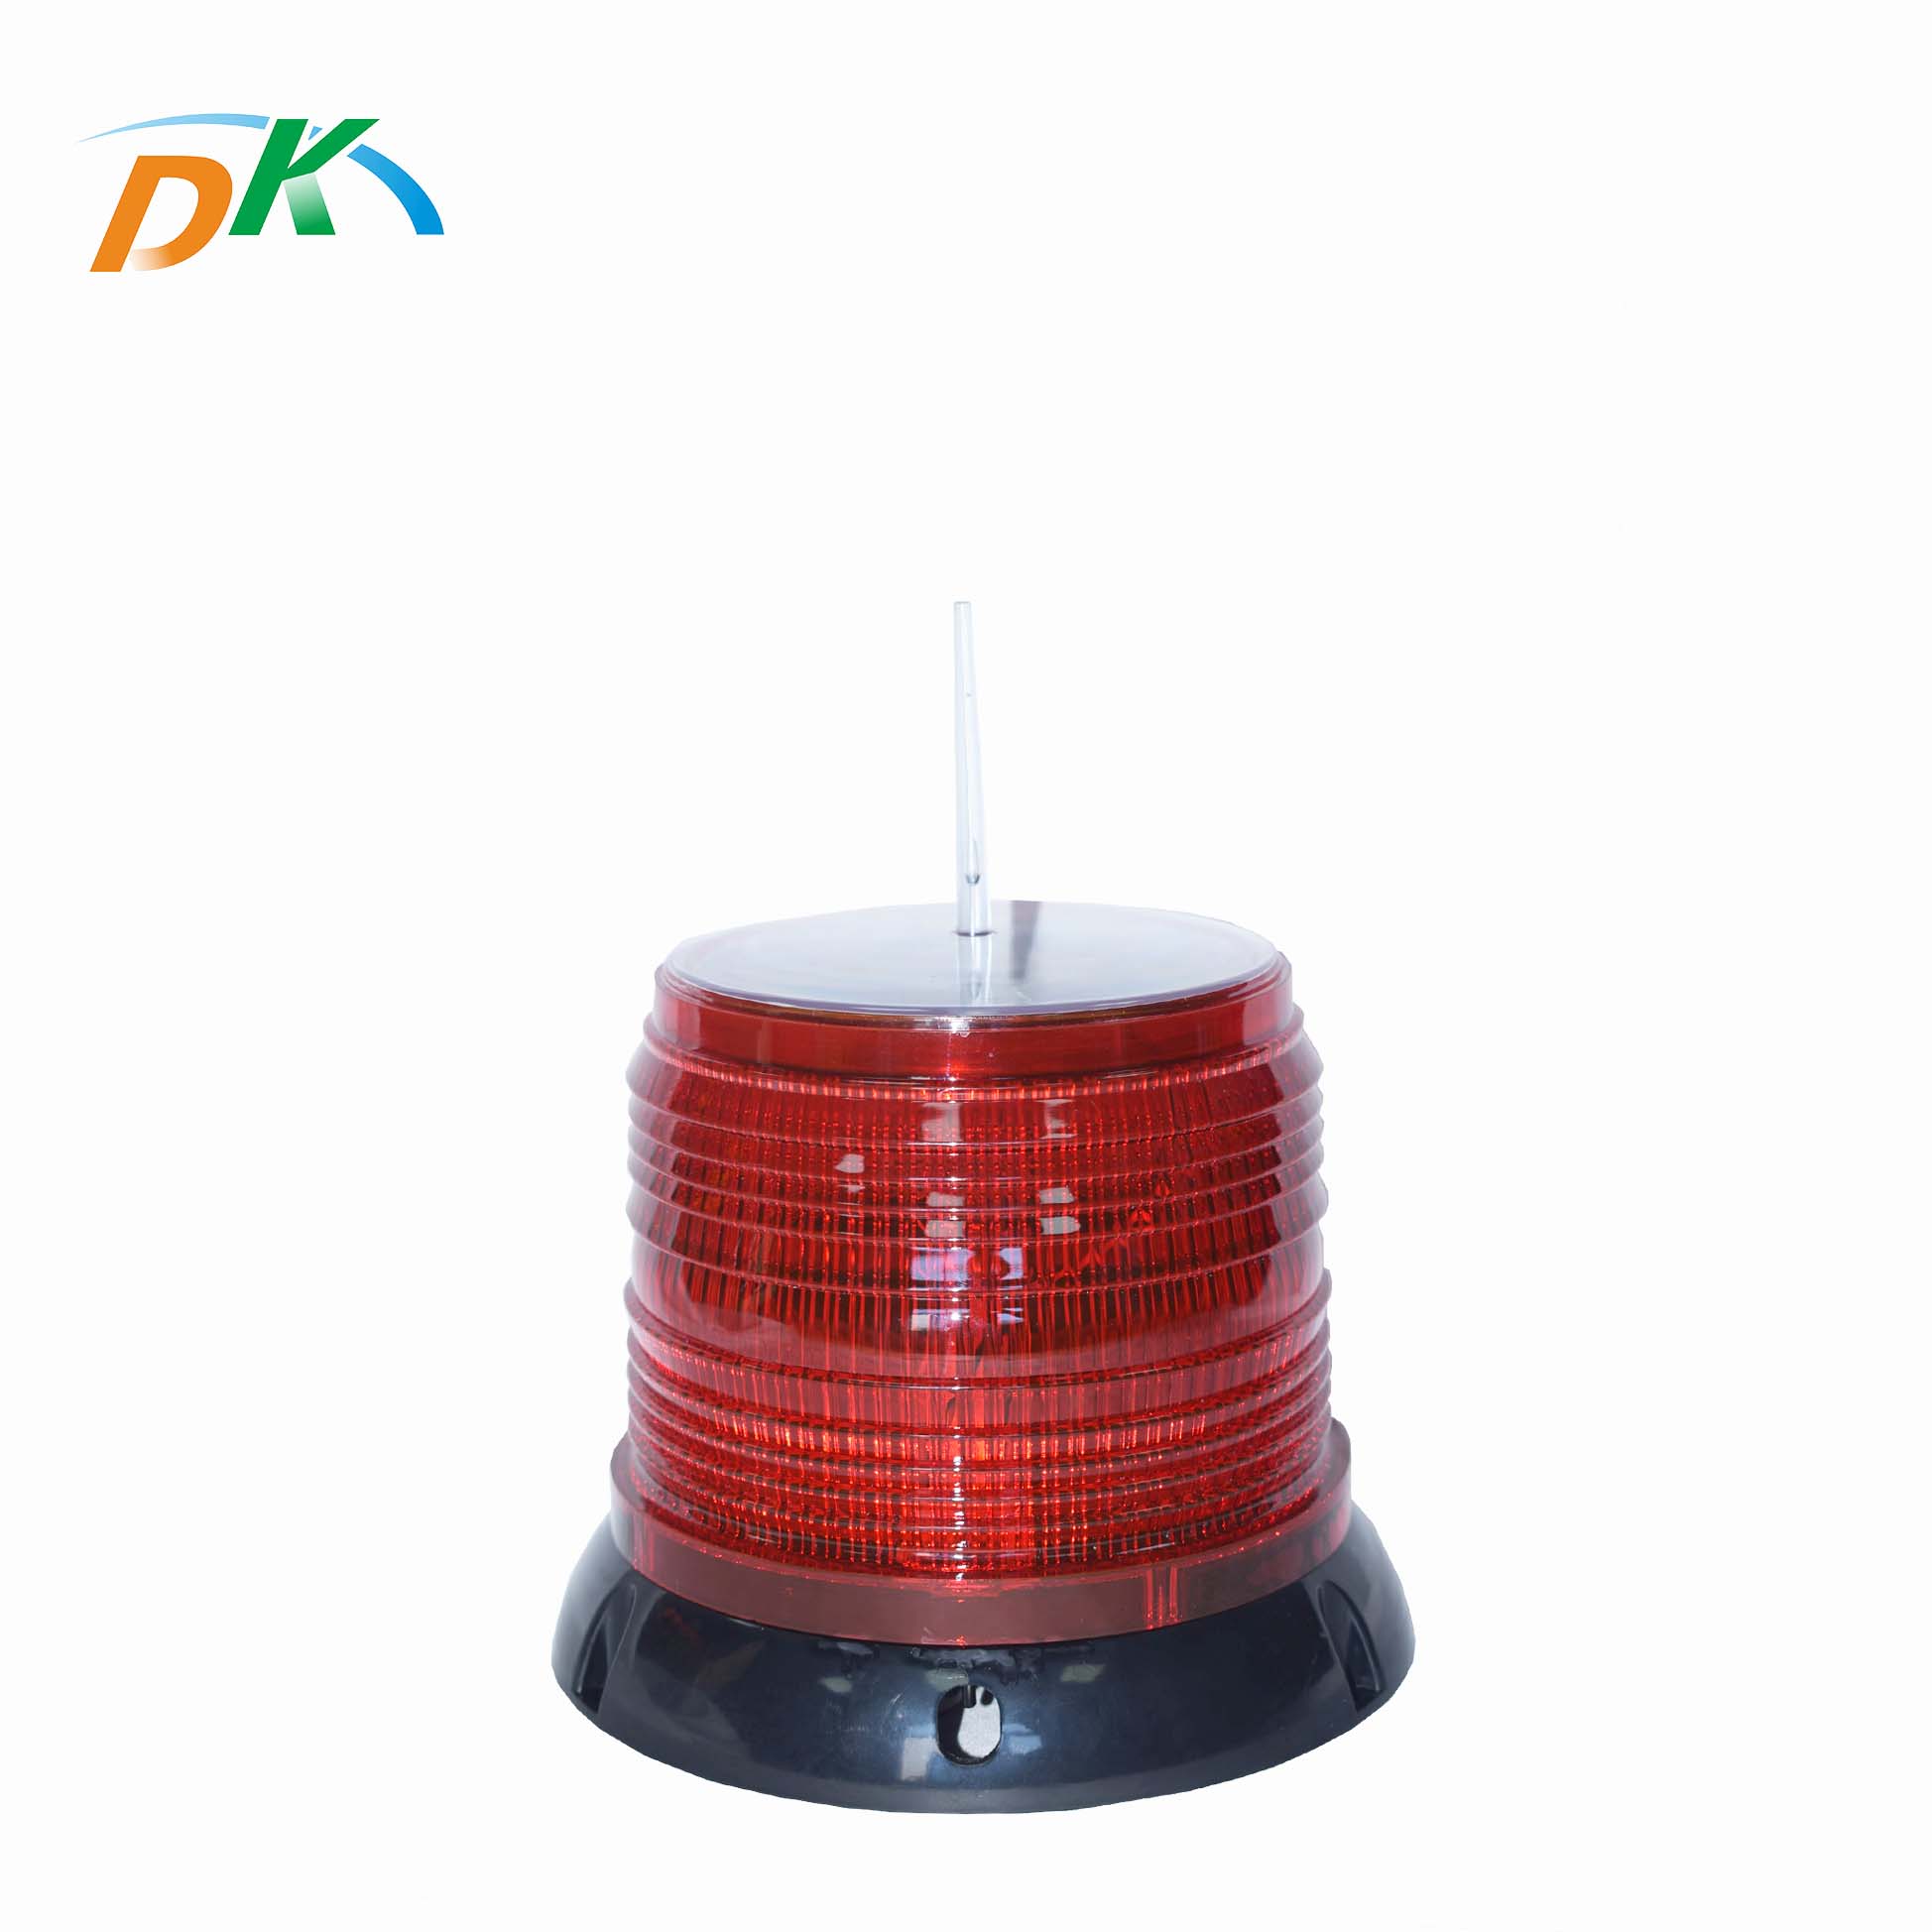 DK LED solar marine lantern light LED flashing building warning aviation light